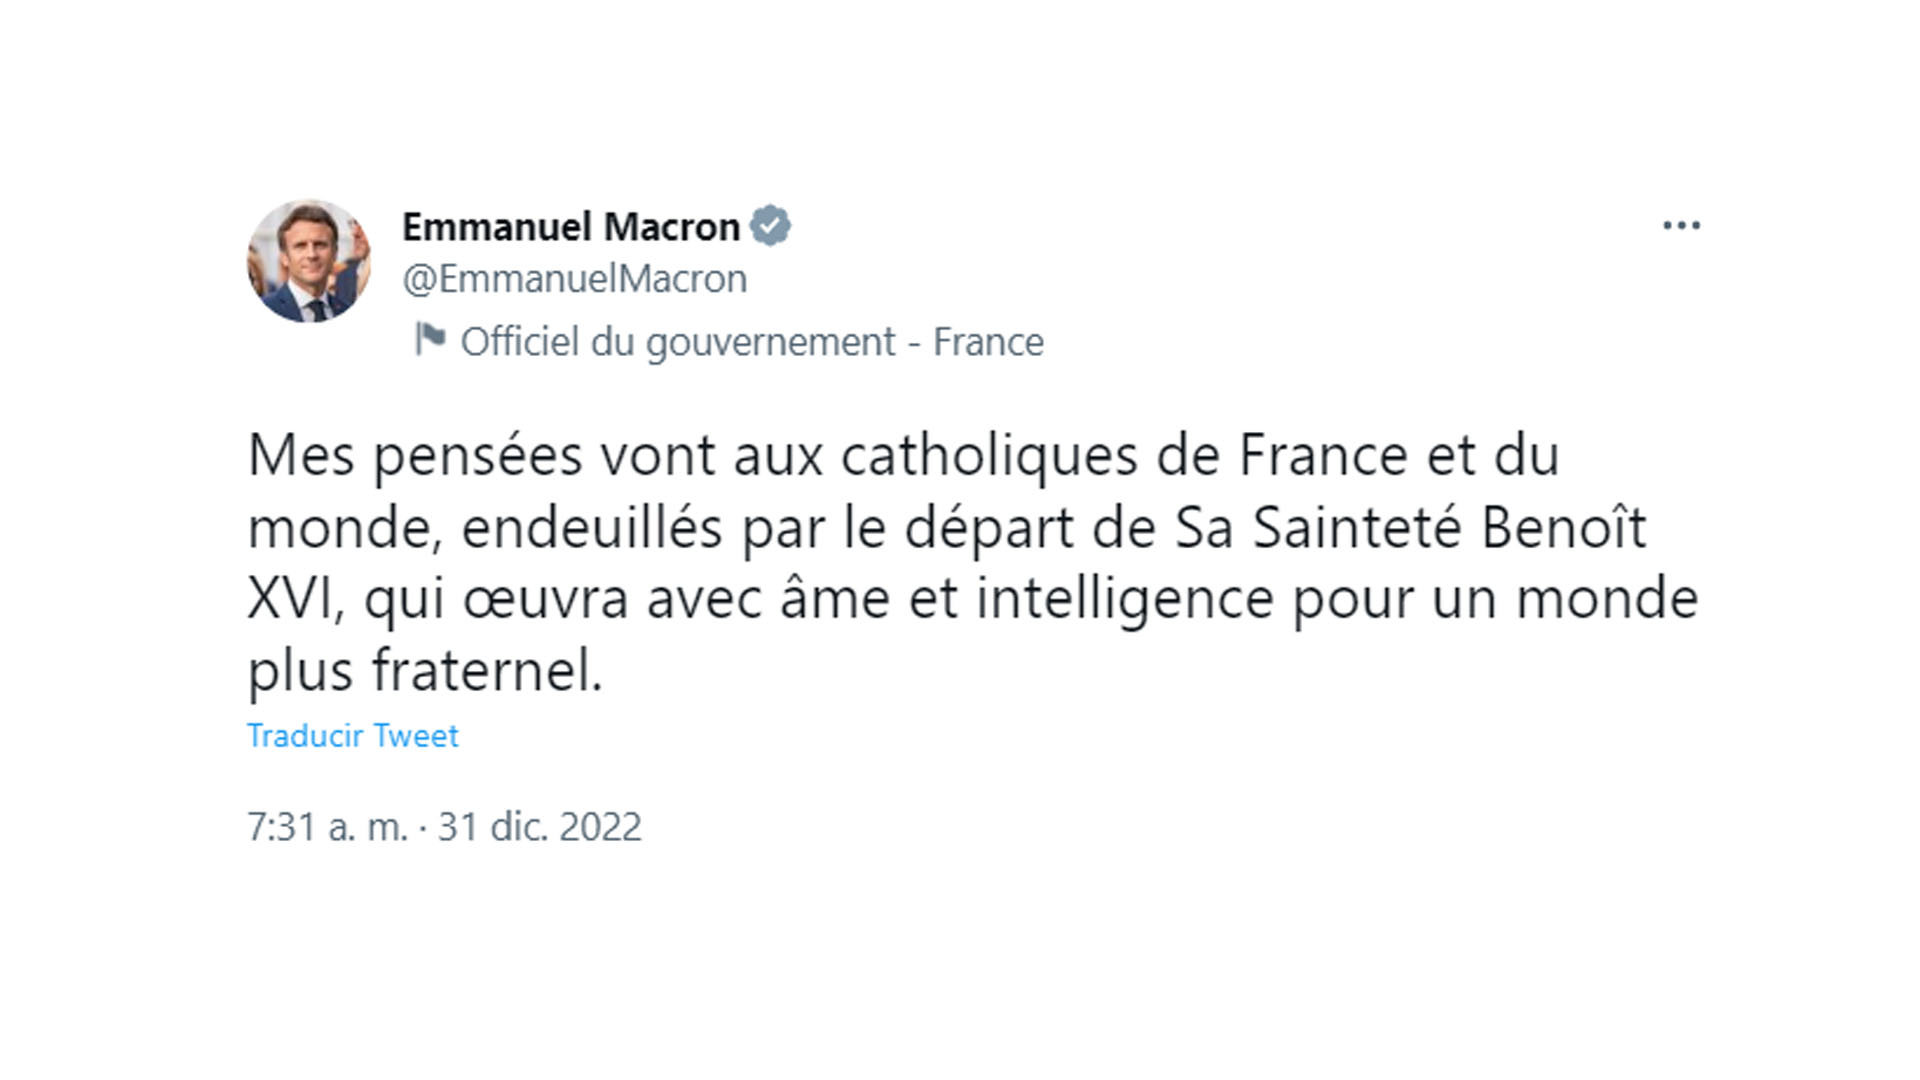 El tuit de Macron tras la muerte de Benedicto XVI 